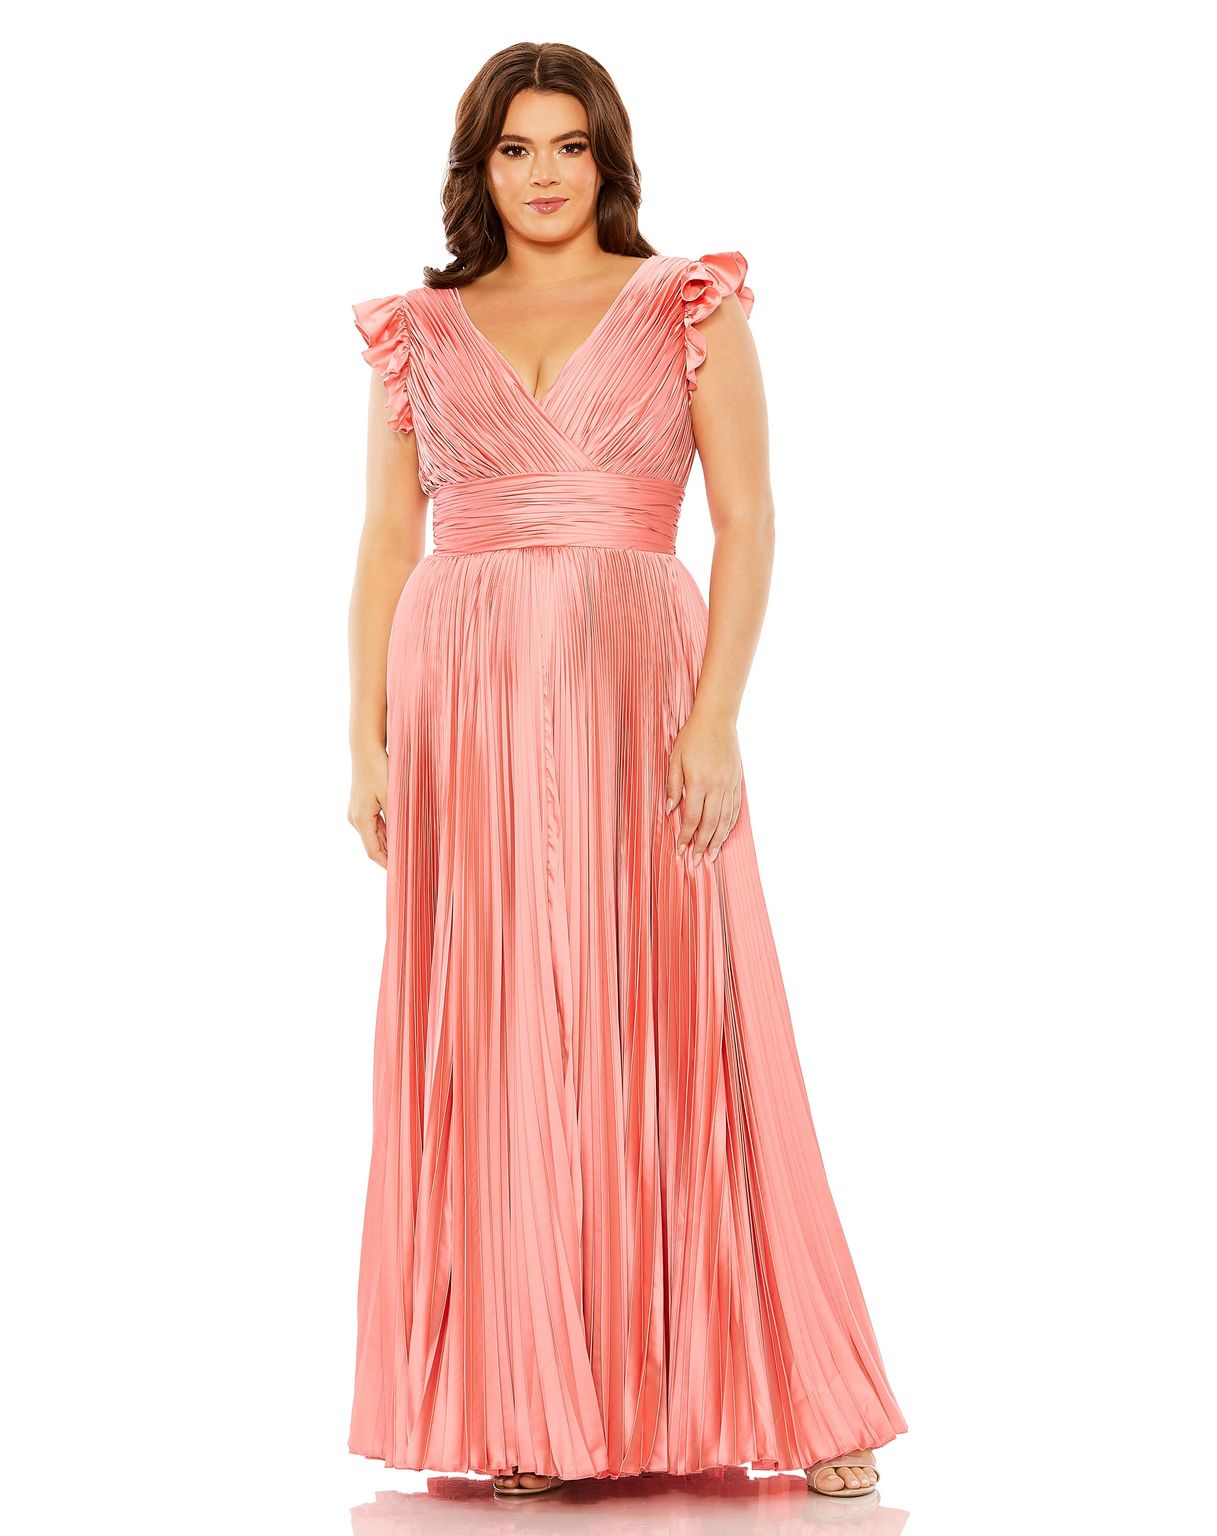 Plus Size Dresses Pleated Plus Size Formal Dress Coral